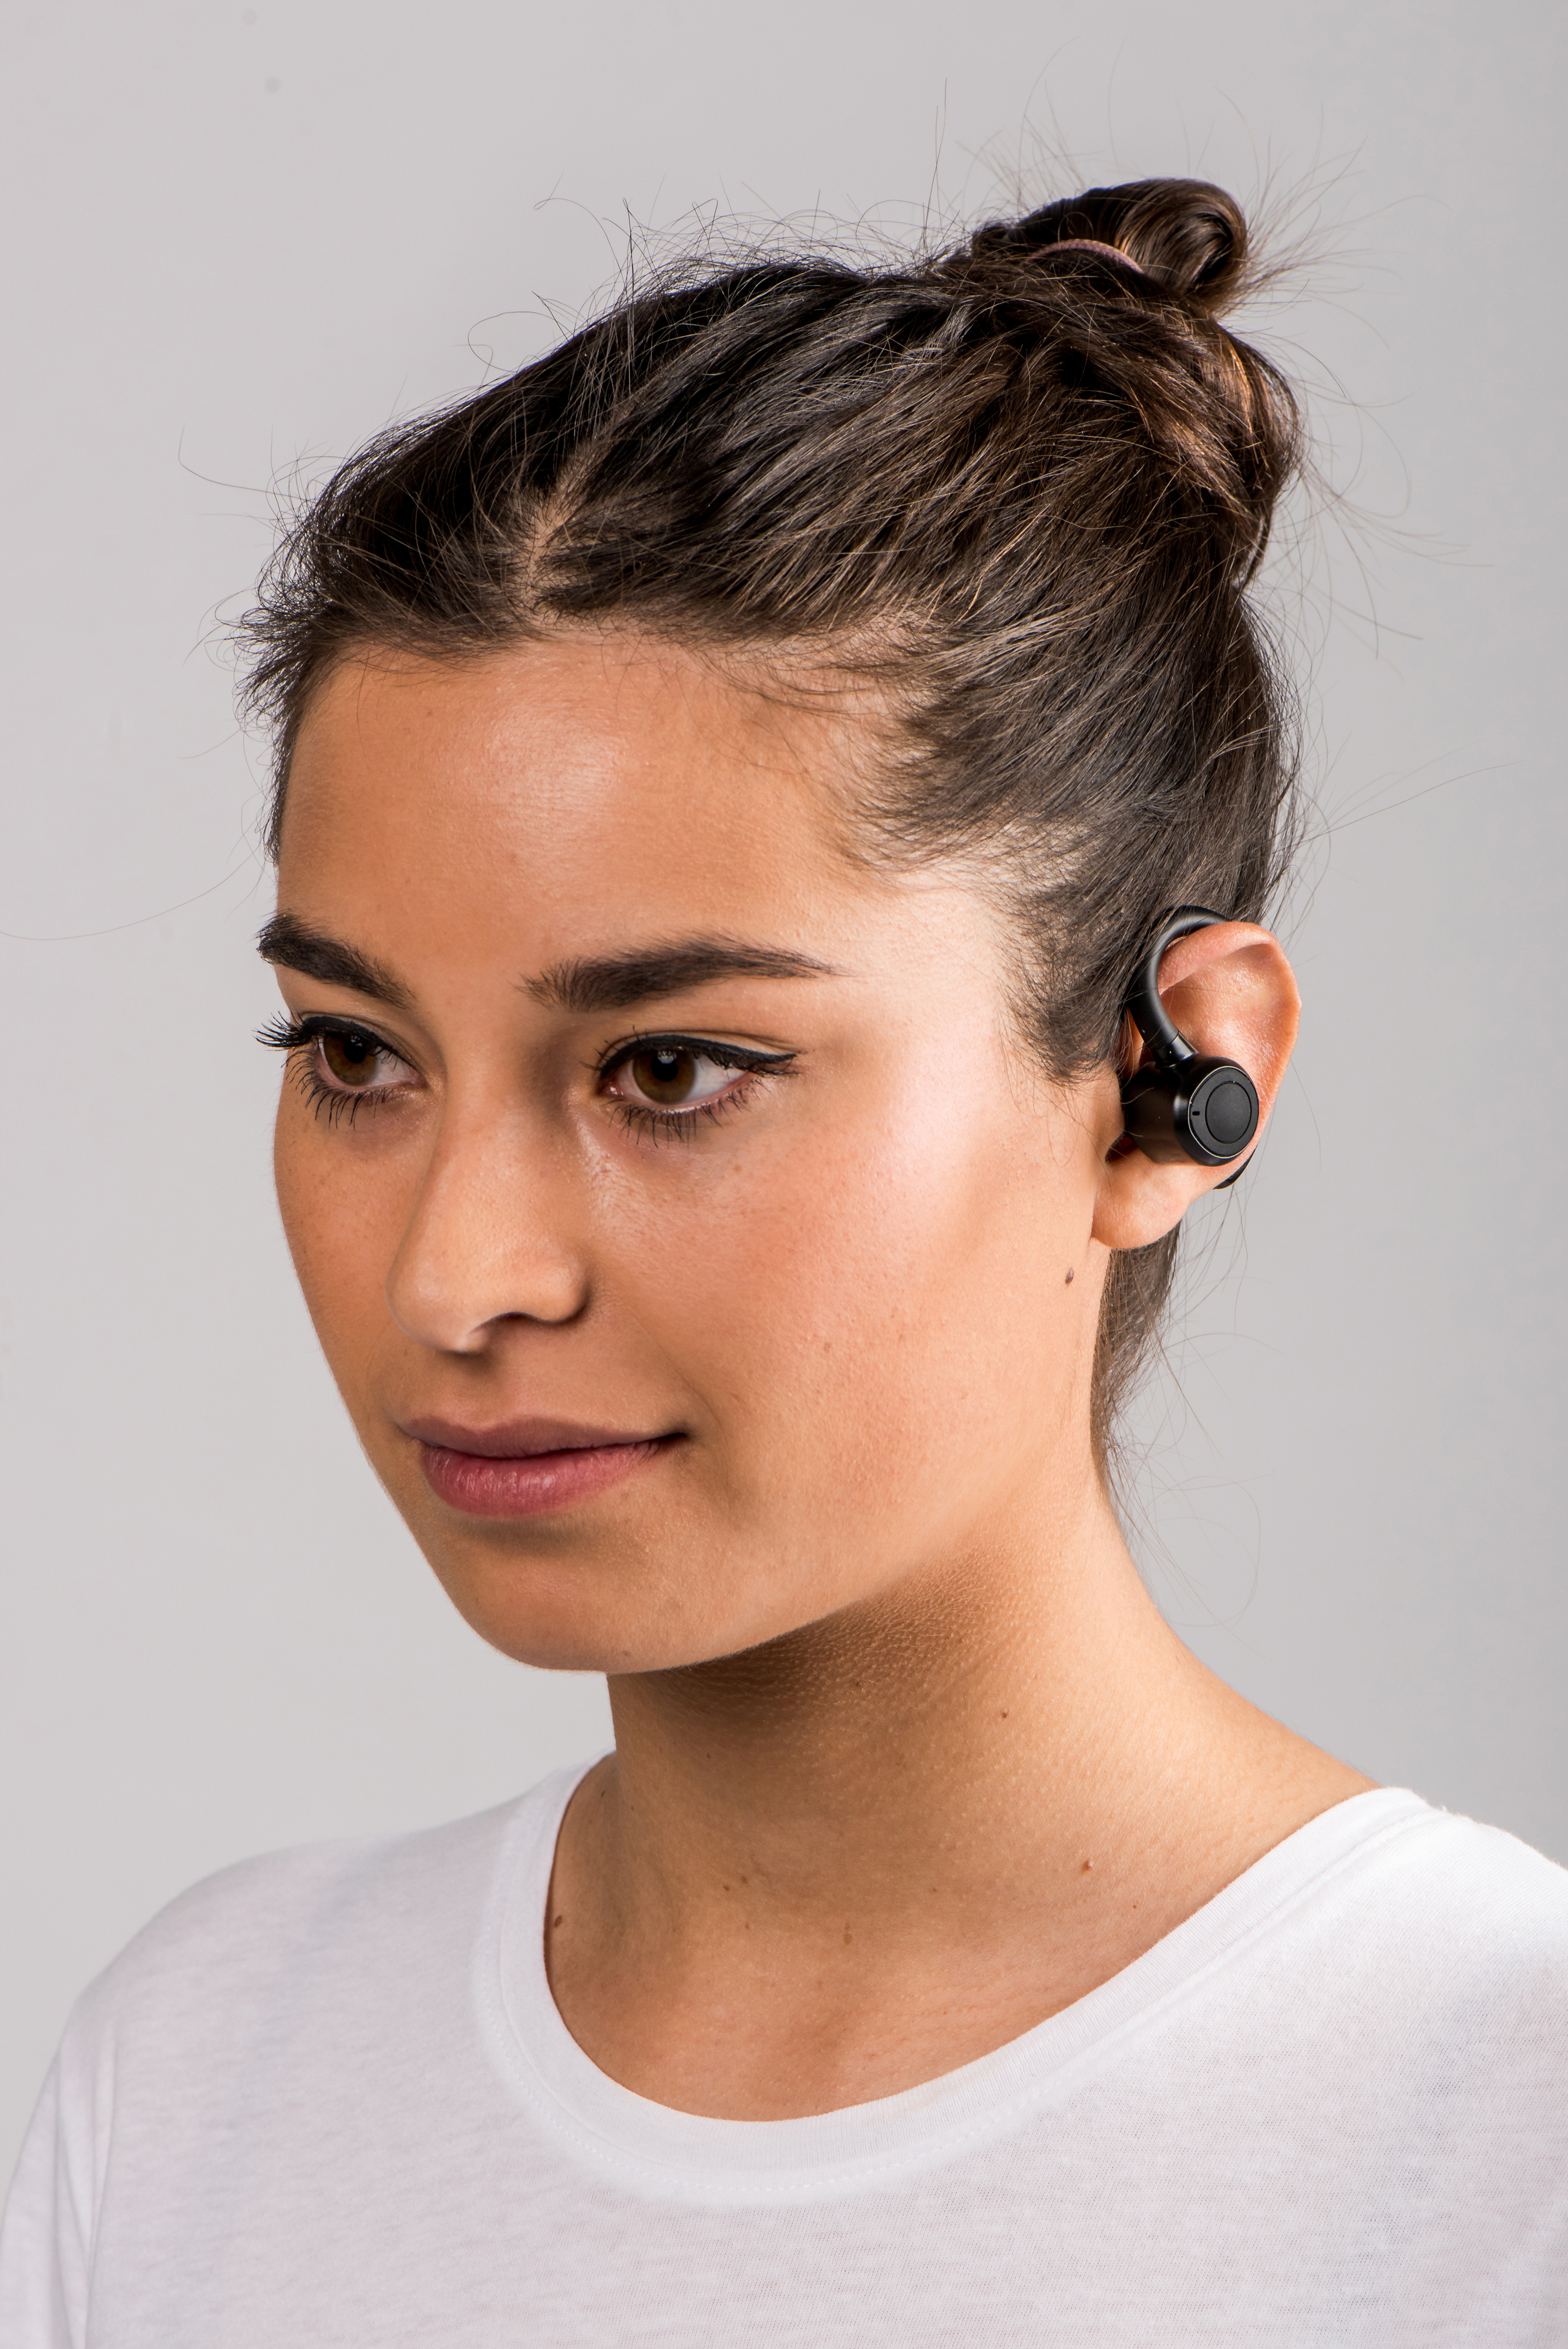 LENCO EPB-460BK - Bluetooth Headphone Bluetooth - IPX5 In-ear Schwarz TWS 